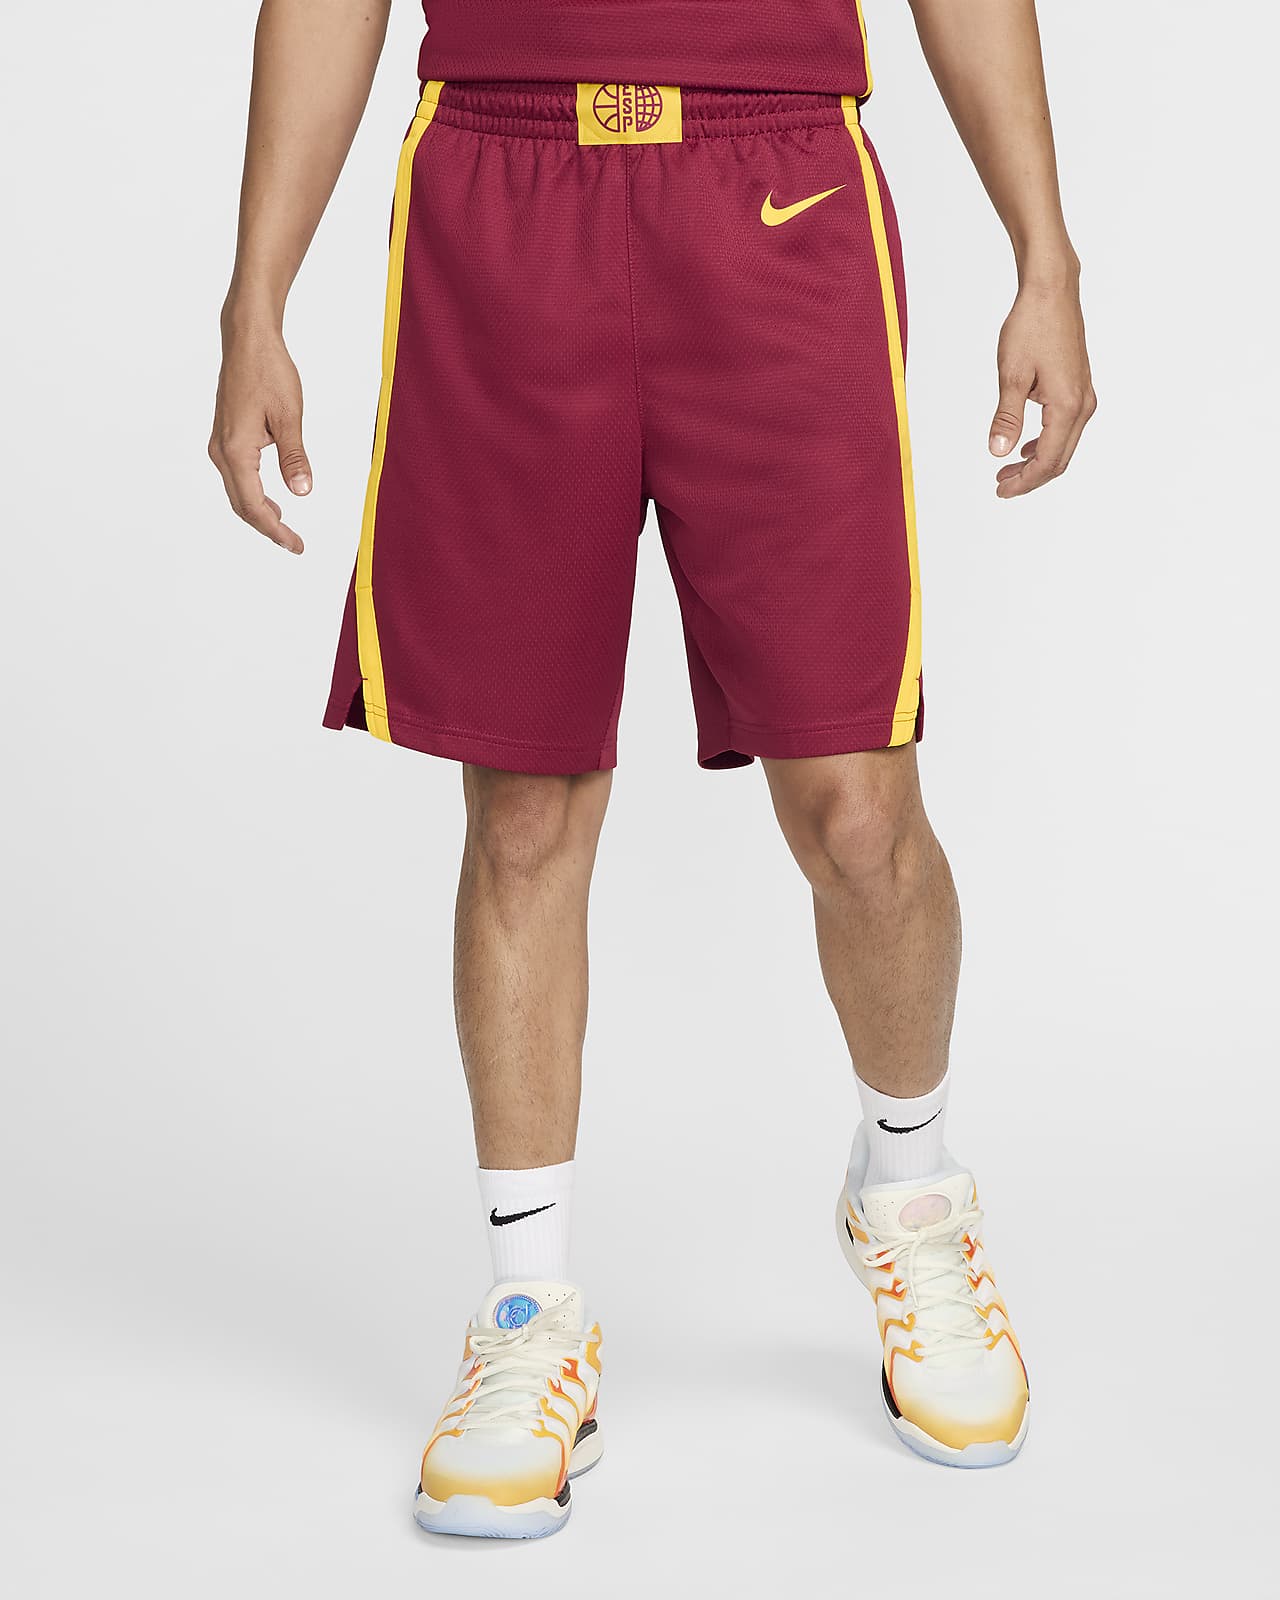 Spanje Limited Road Nike Basketbaljersey voor heren